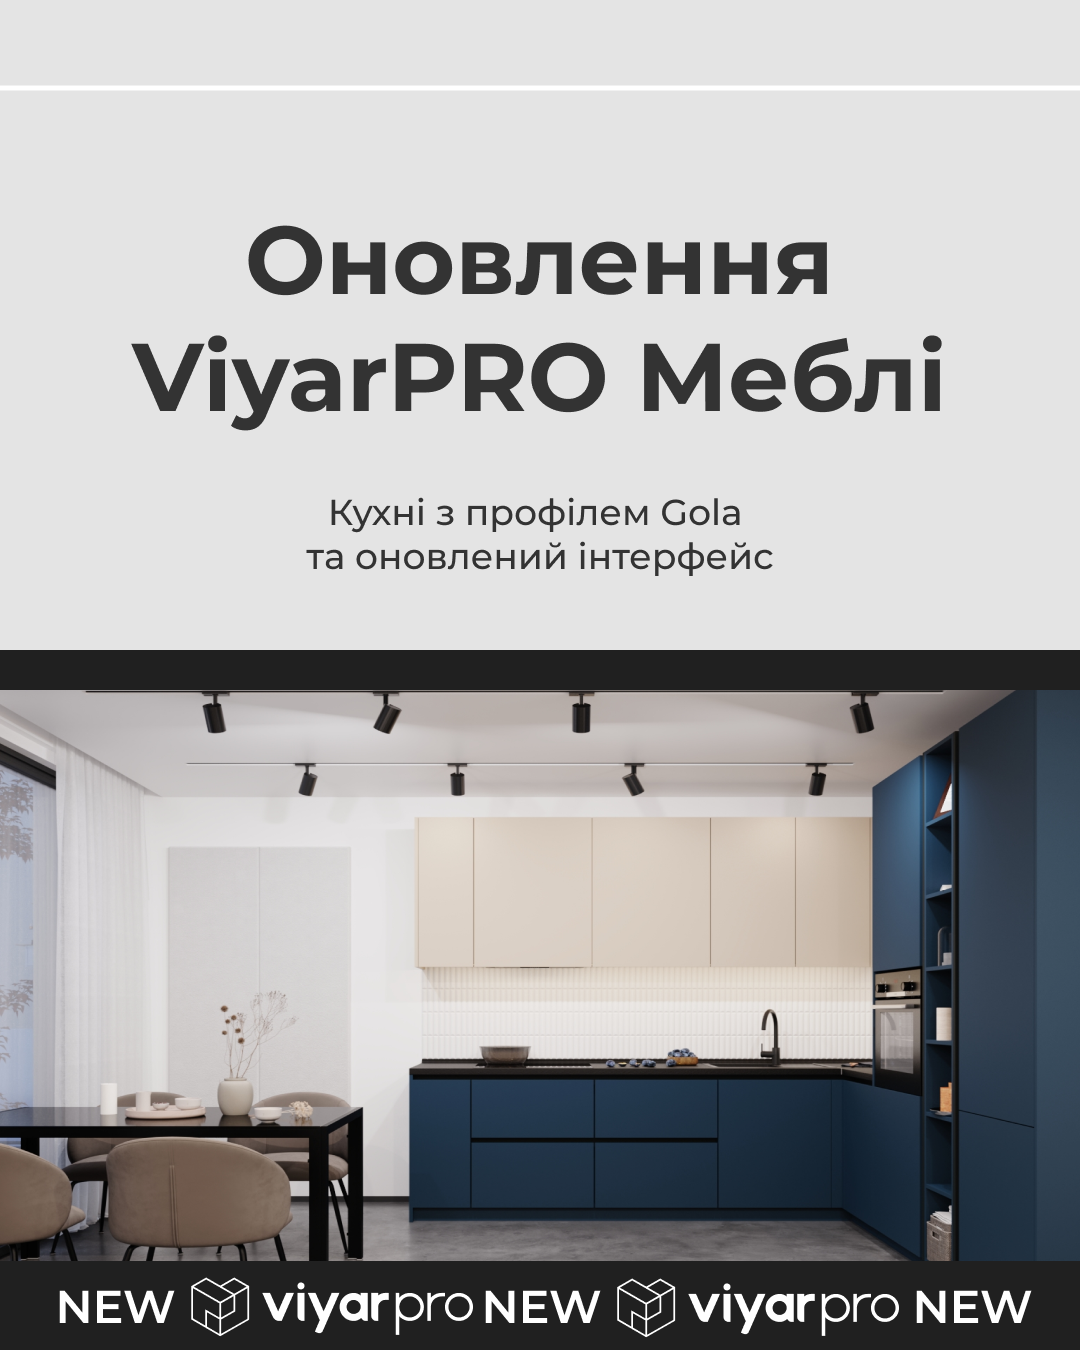 Оновлений інтерфейс ViyarPRO Меблі та кухні з профілем Gola